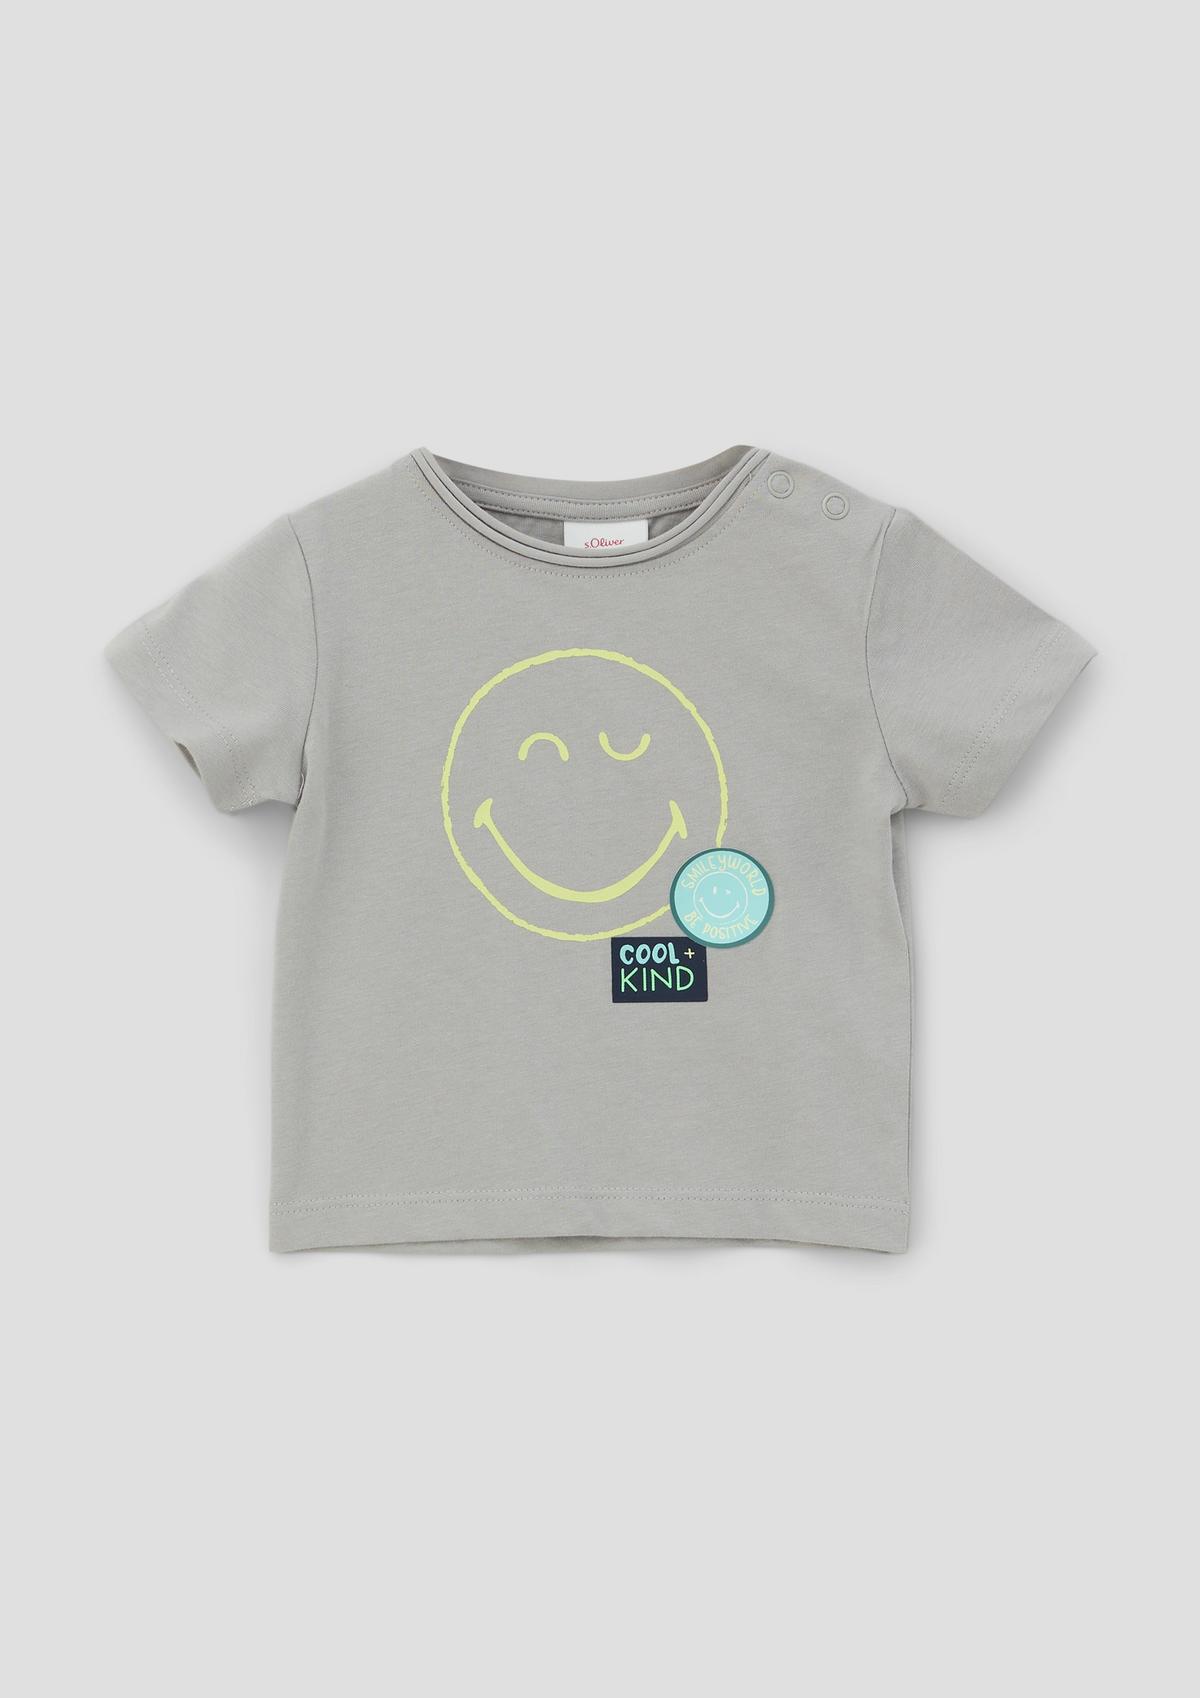 s.Oliver Jerseyshirt mit Smiley®-Frontprint